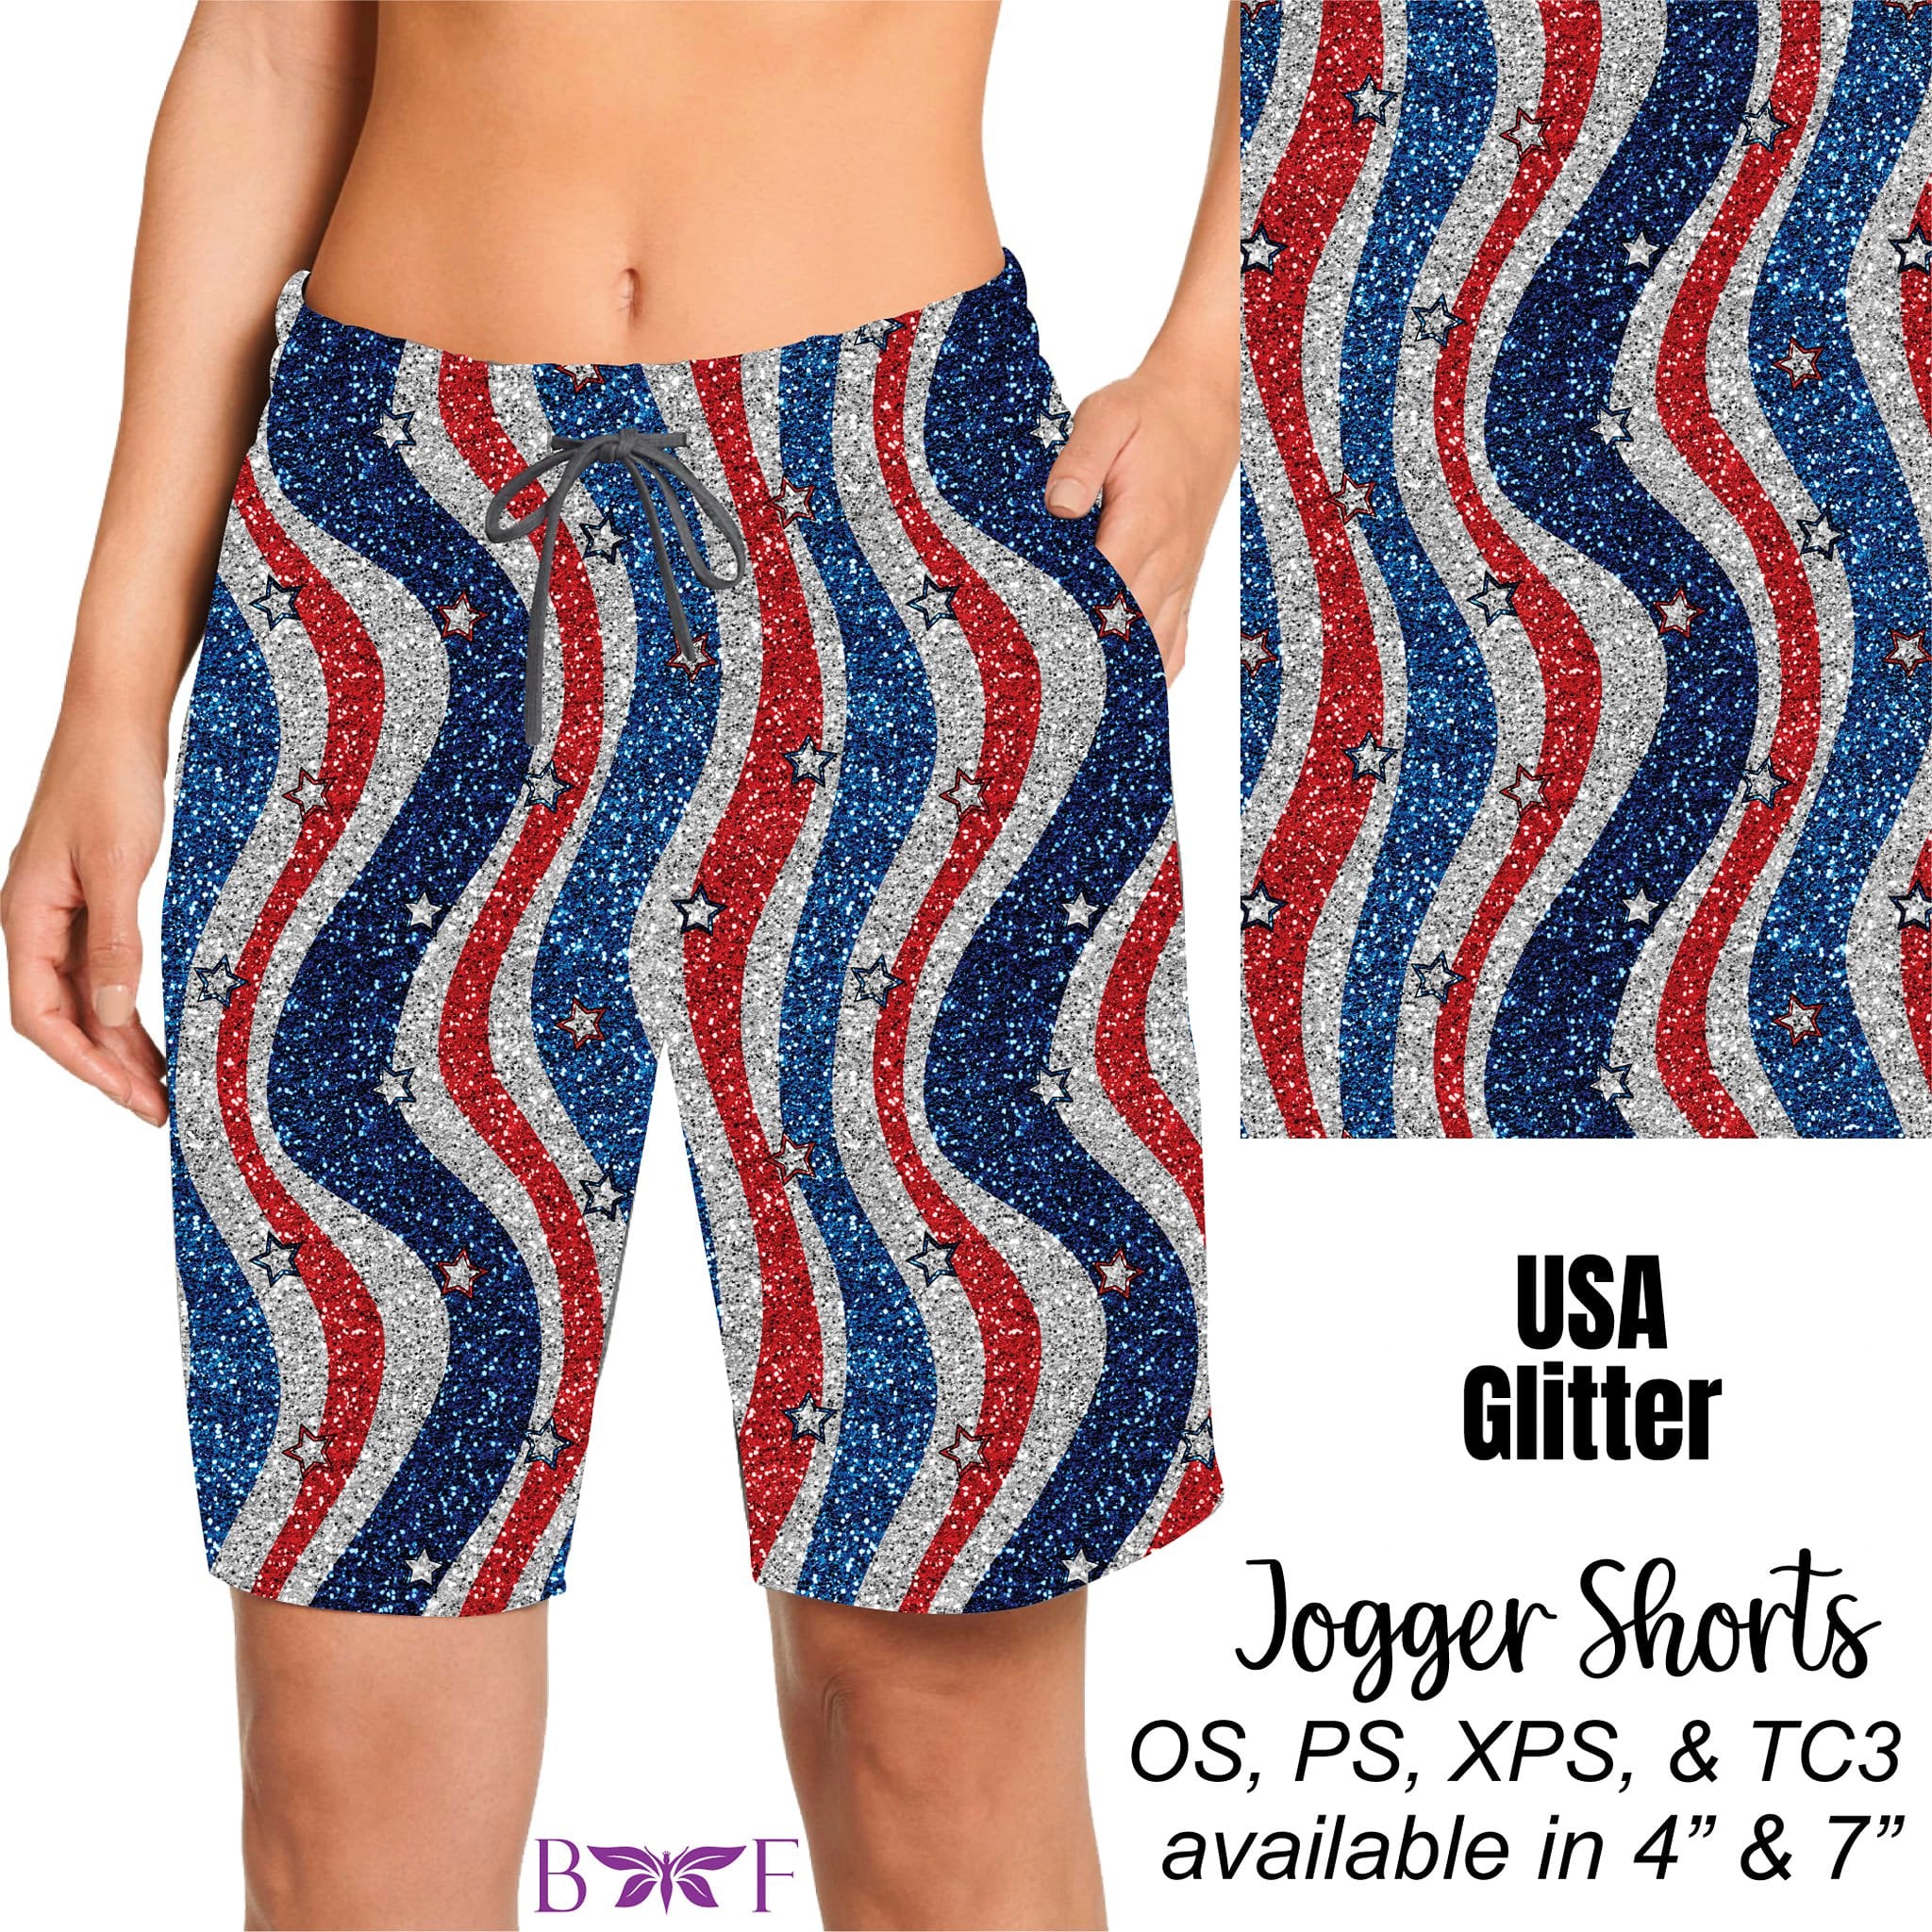 USA Glitter Capris, and shorts